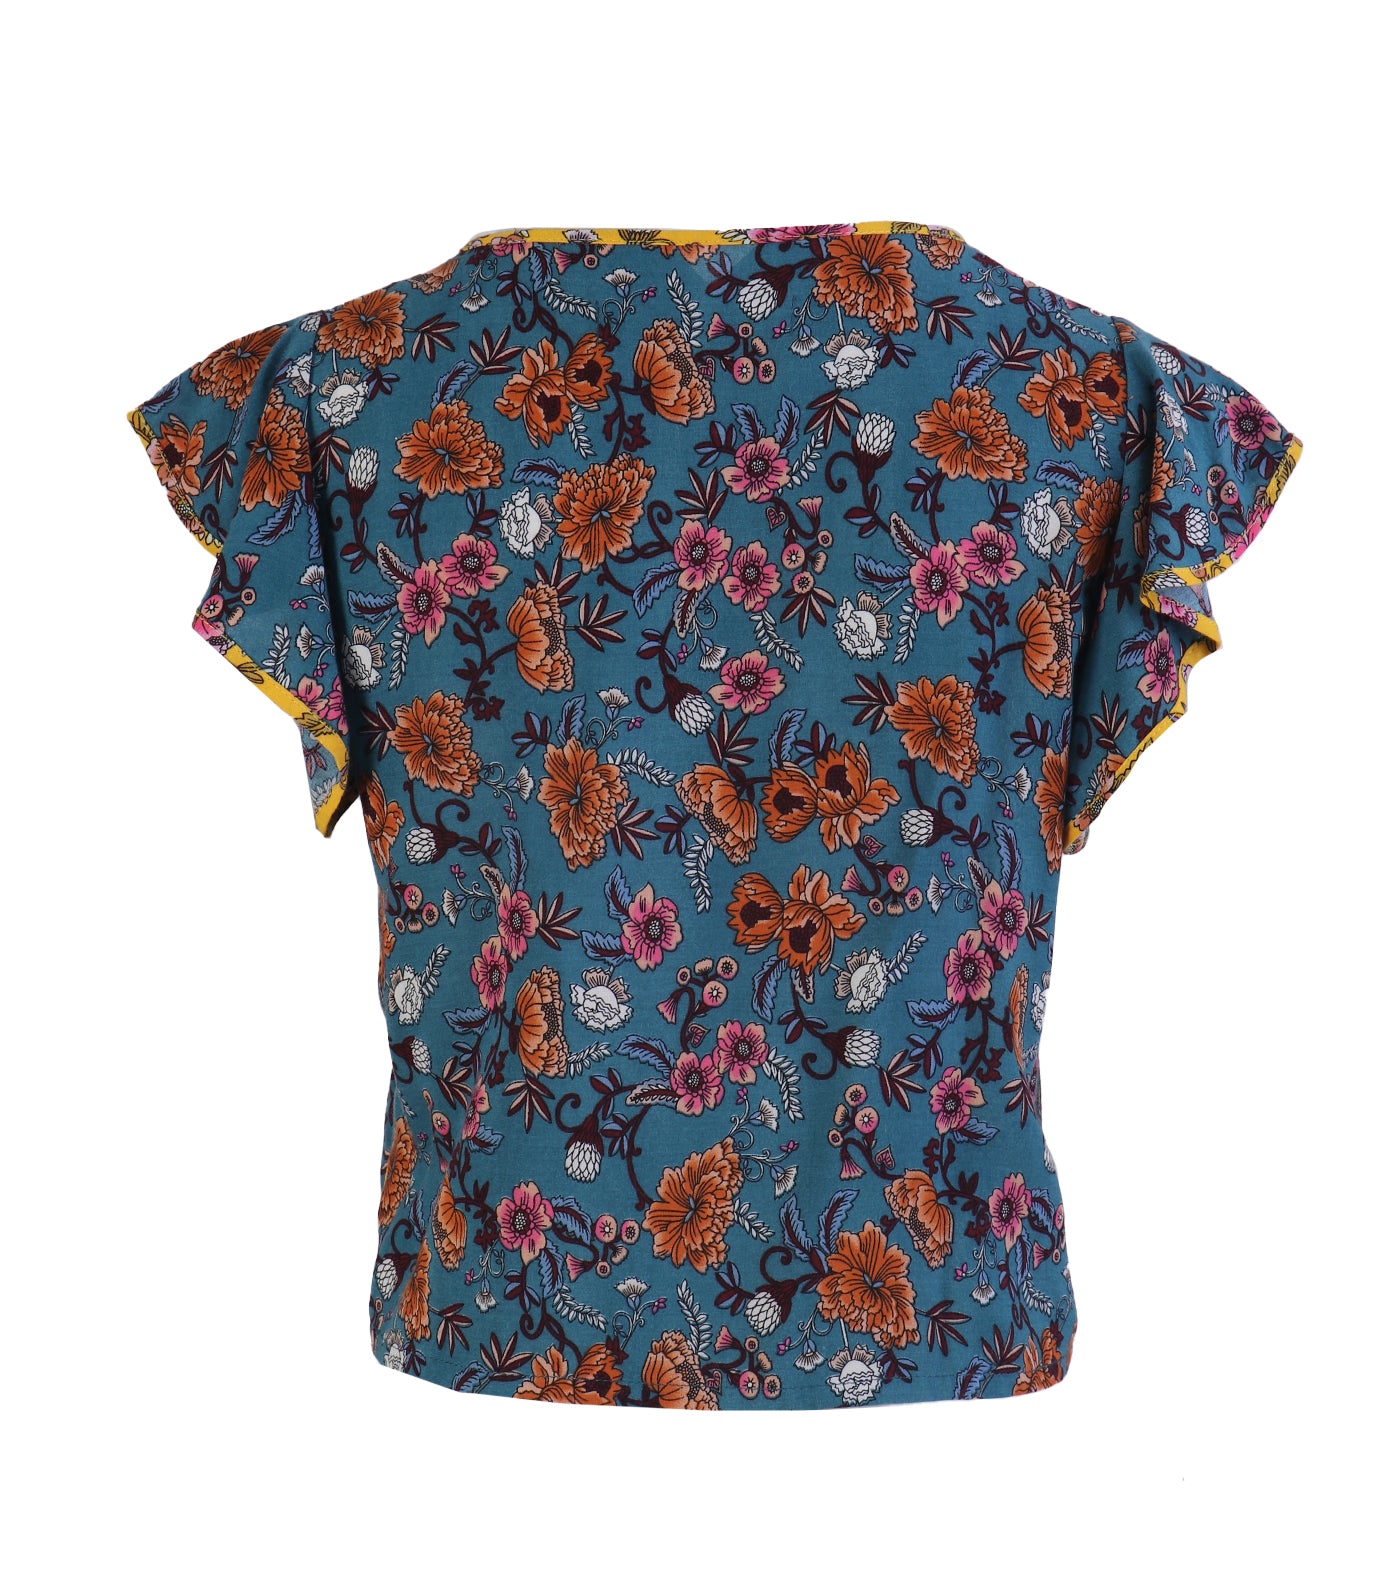 Lotus Resortwear Aloa Multicolor Print Top with Ruffle Sleeves Blue